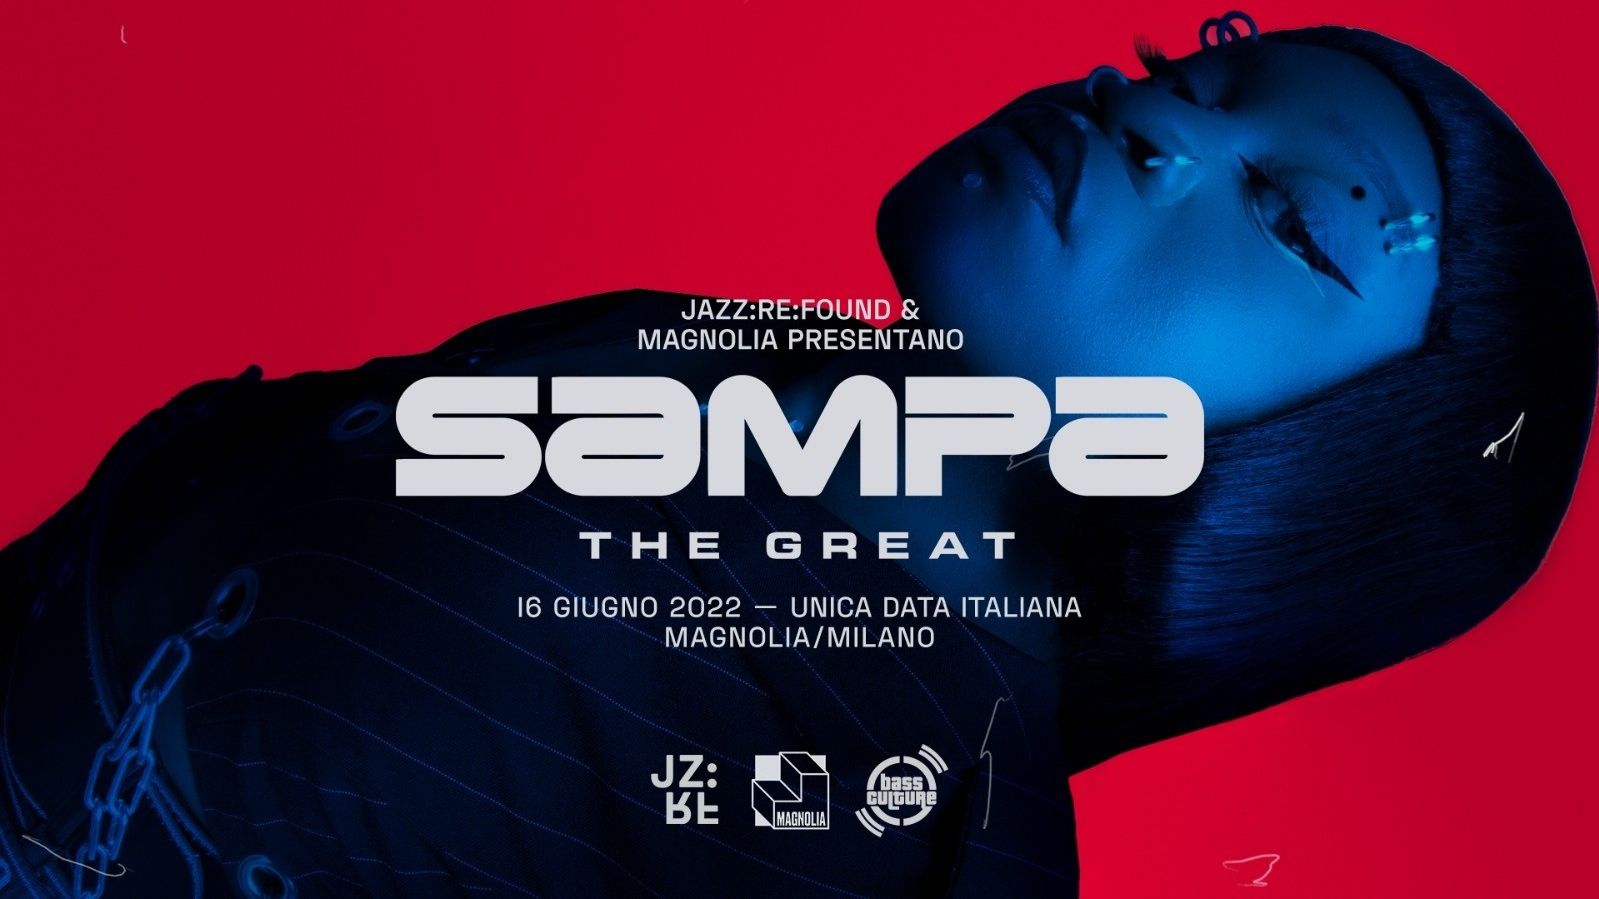 Sampa The Great